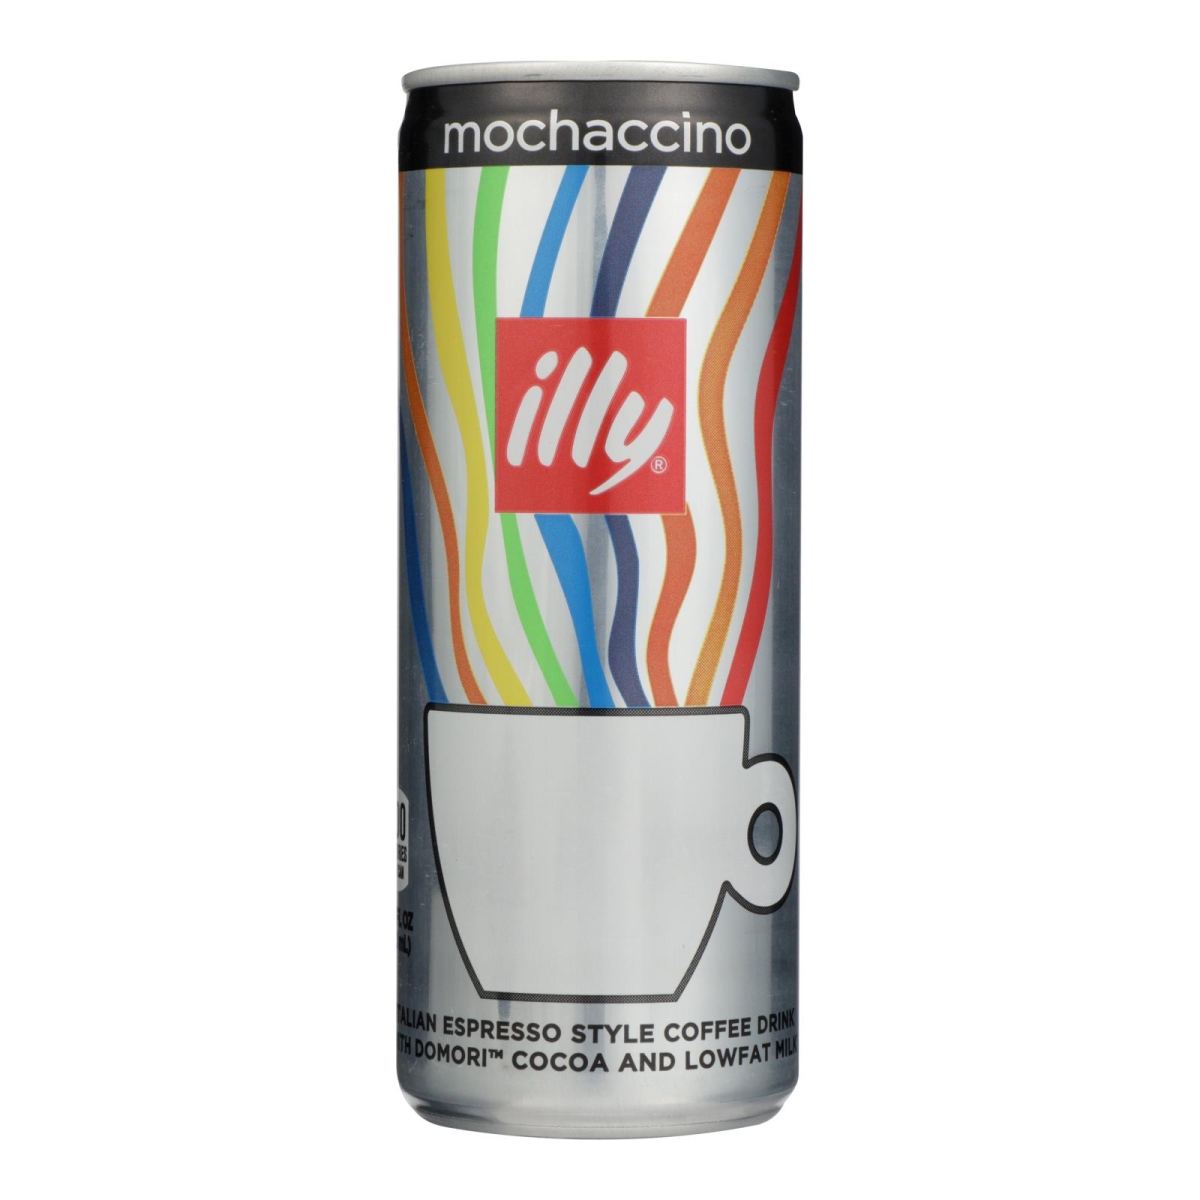 Illy Caffe Coffee 2445088 8.45 Fl Oz Mochaccino Coffee Drink, Case Of 12